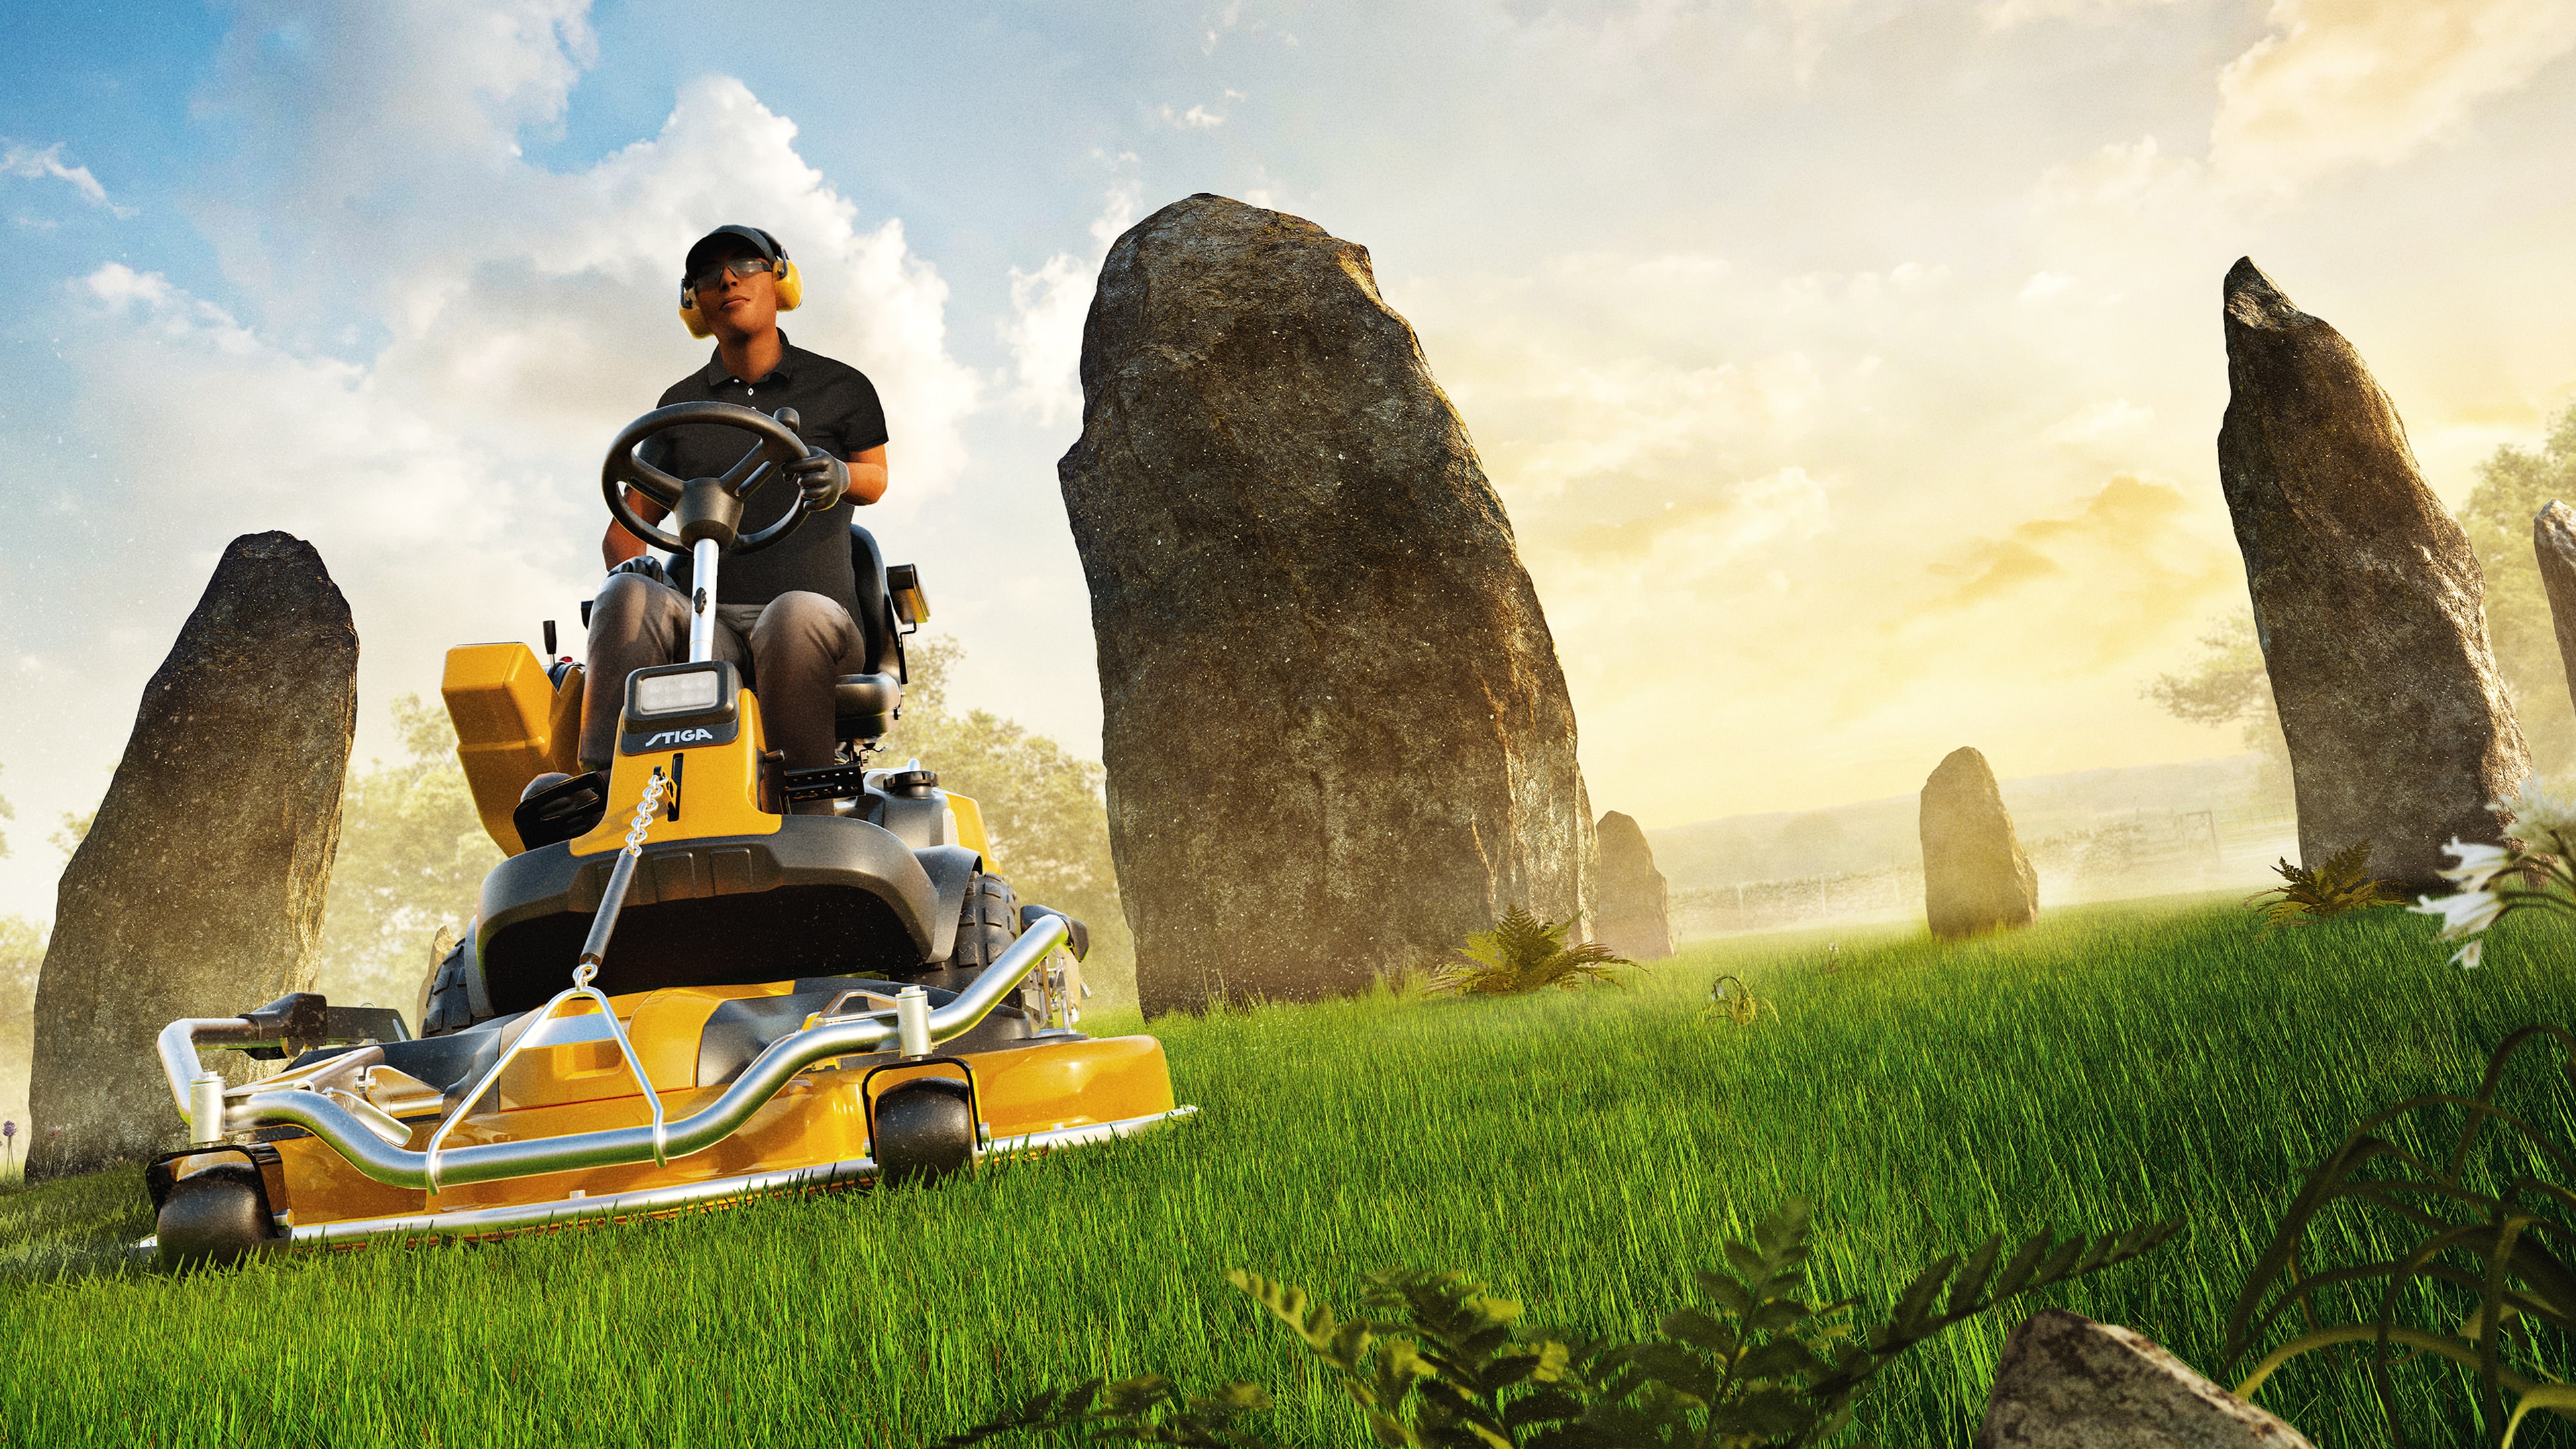 Lawn Mowing Simulator - Ancient Britain PS4 & PS5 (English/Chinese/Korean/Japanese Ver.)